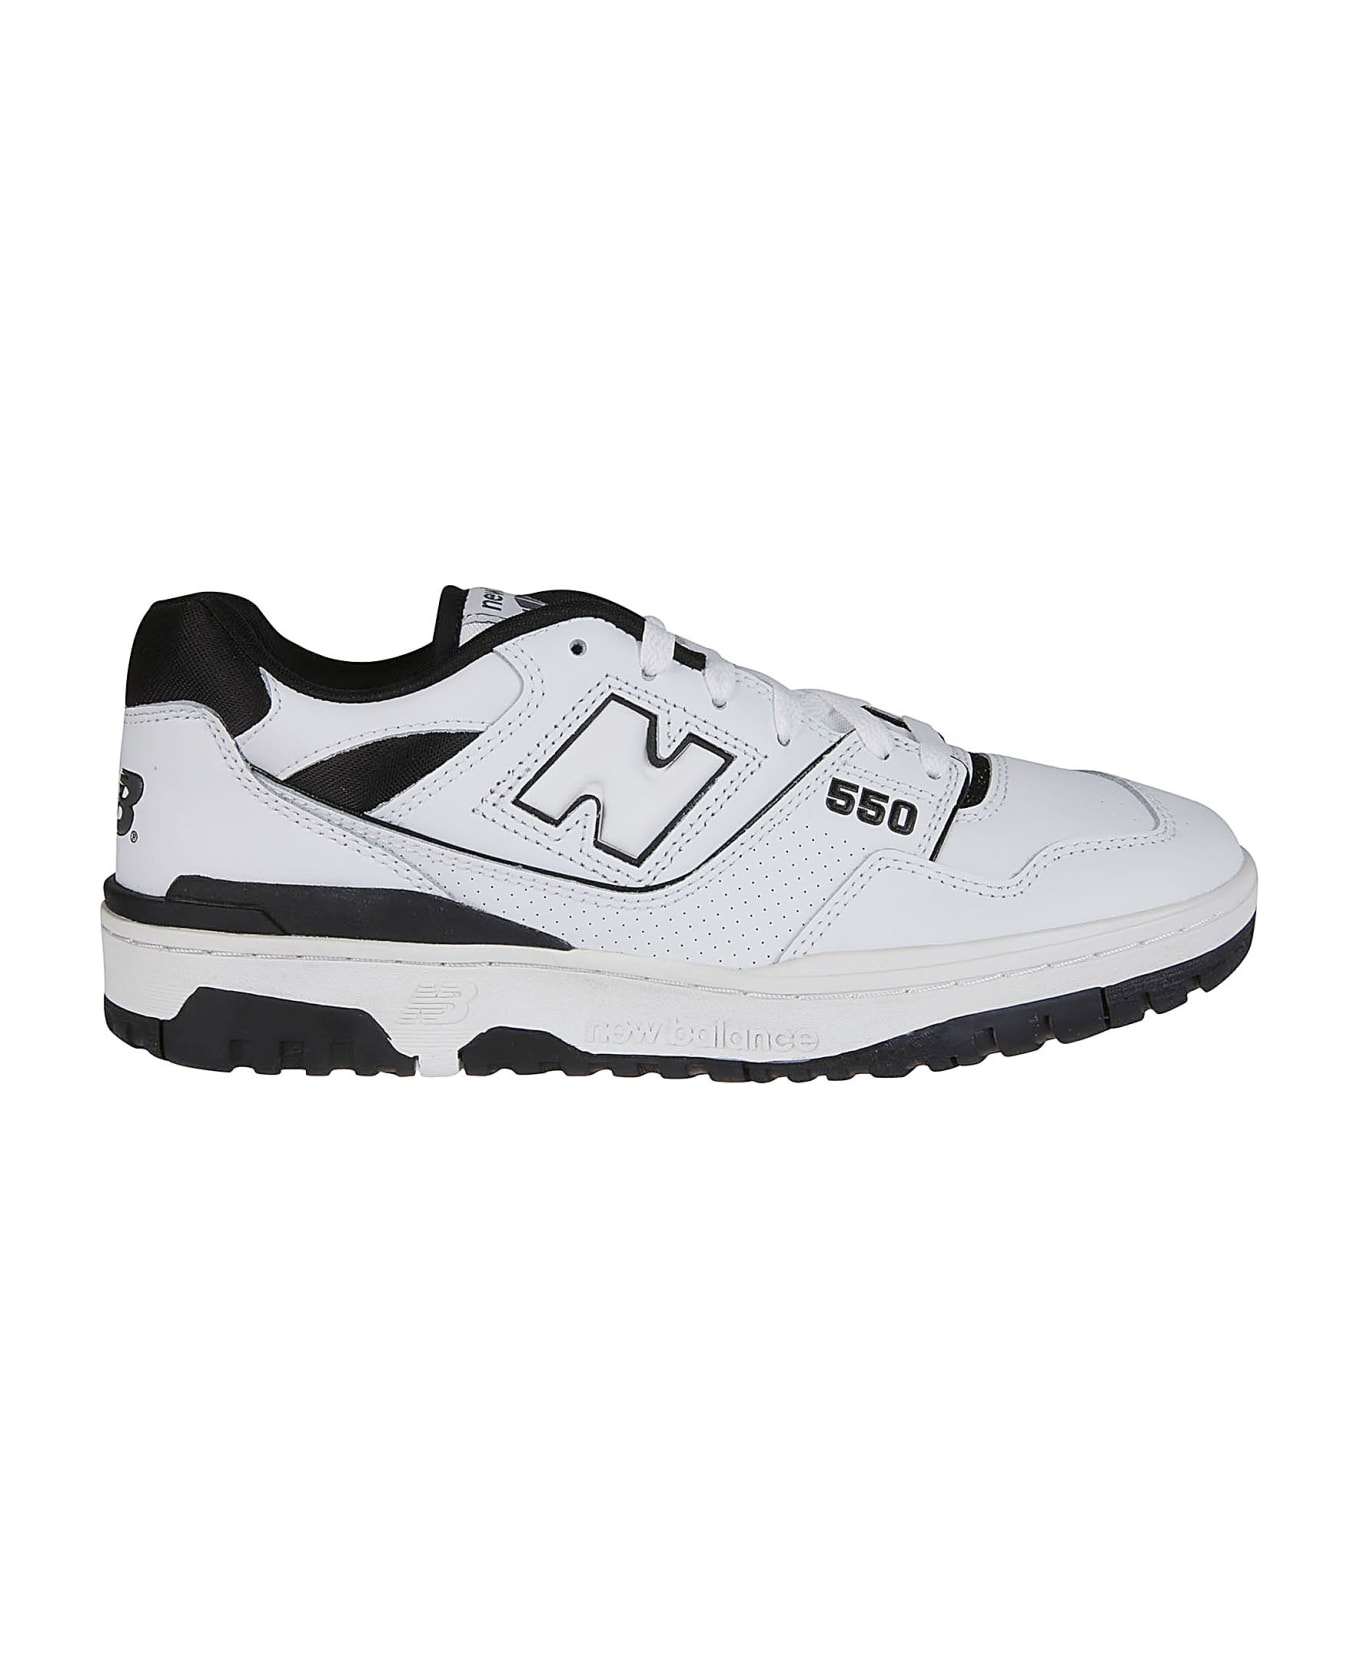 New Balance 550 Sneakers - White スニーカー